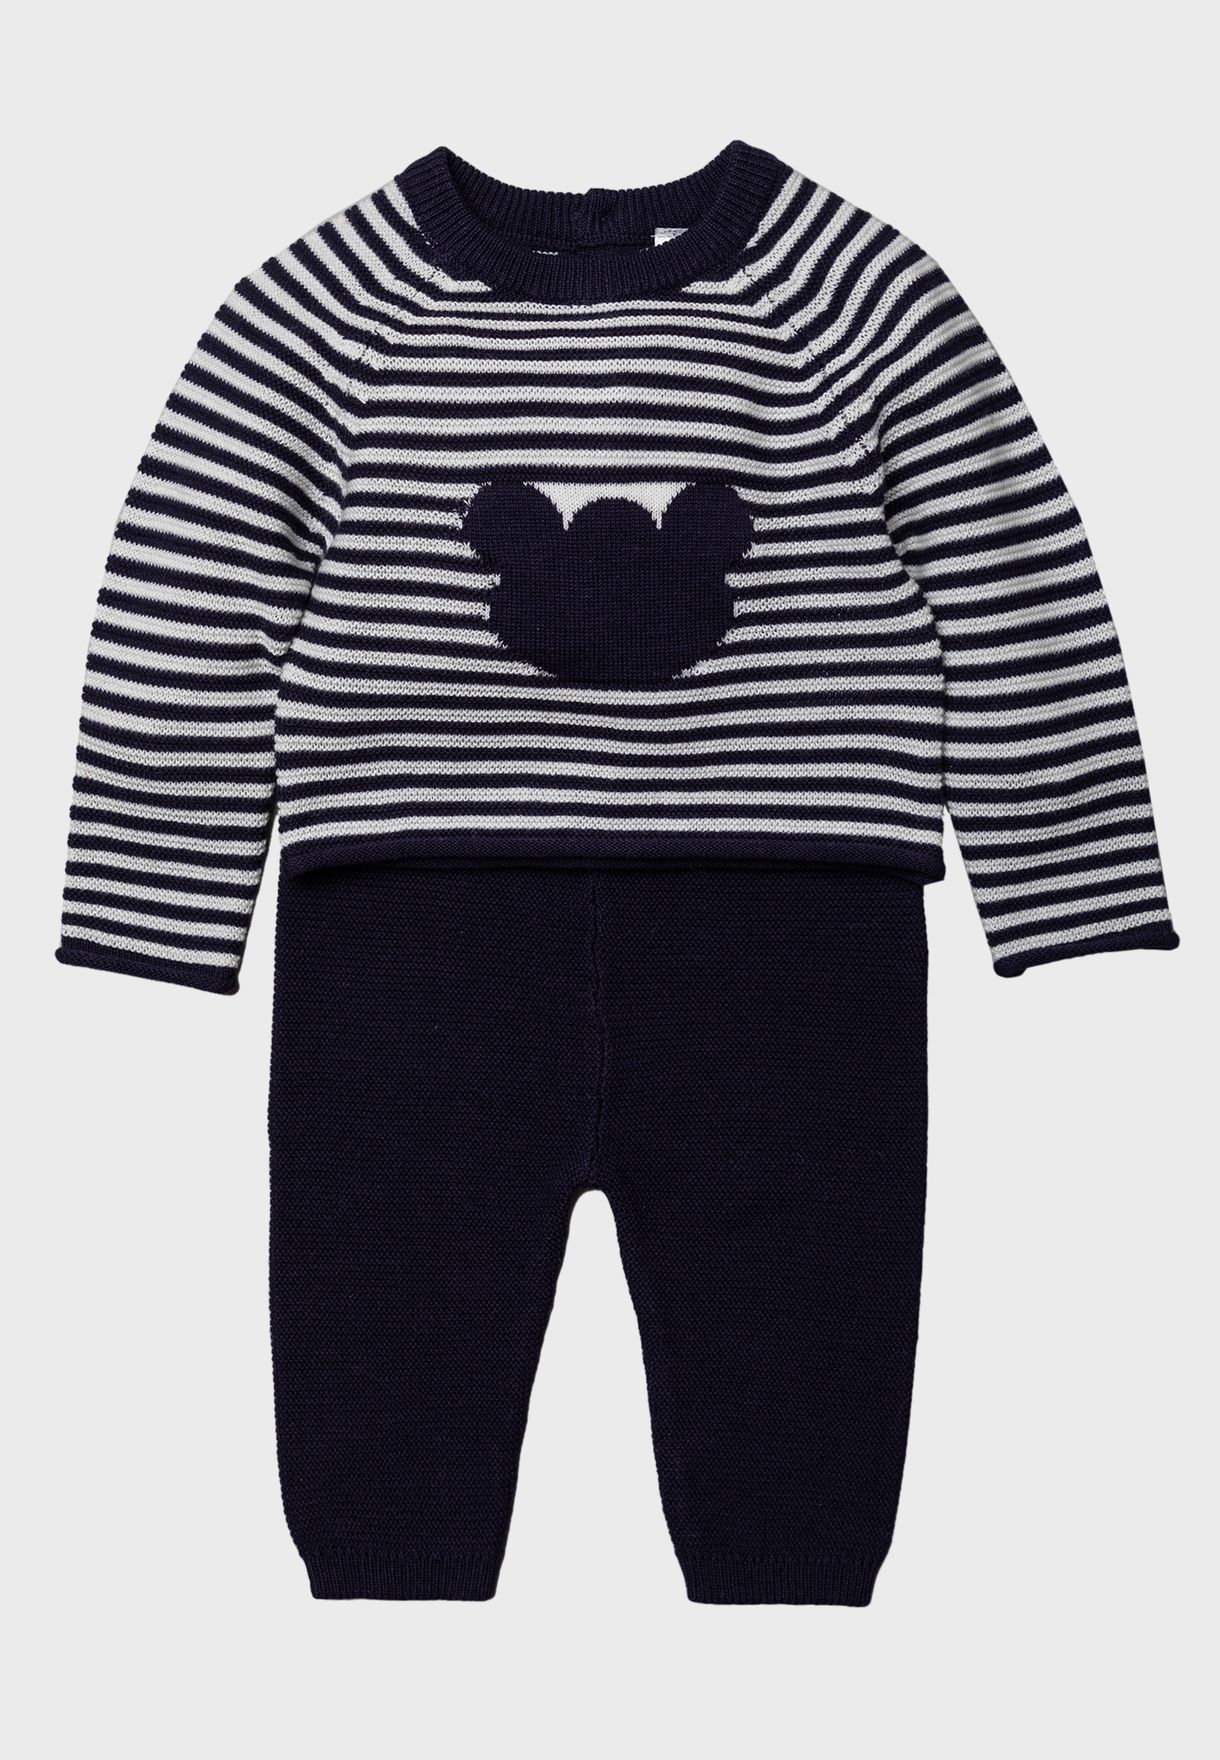 Infant Heart Knitted Jumper And Bottom Set